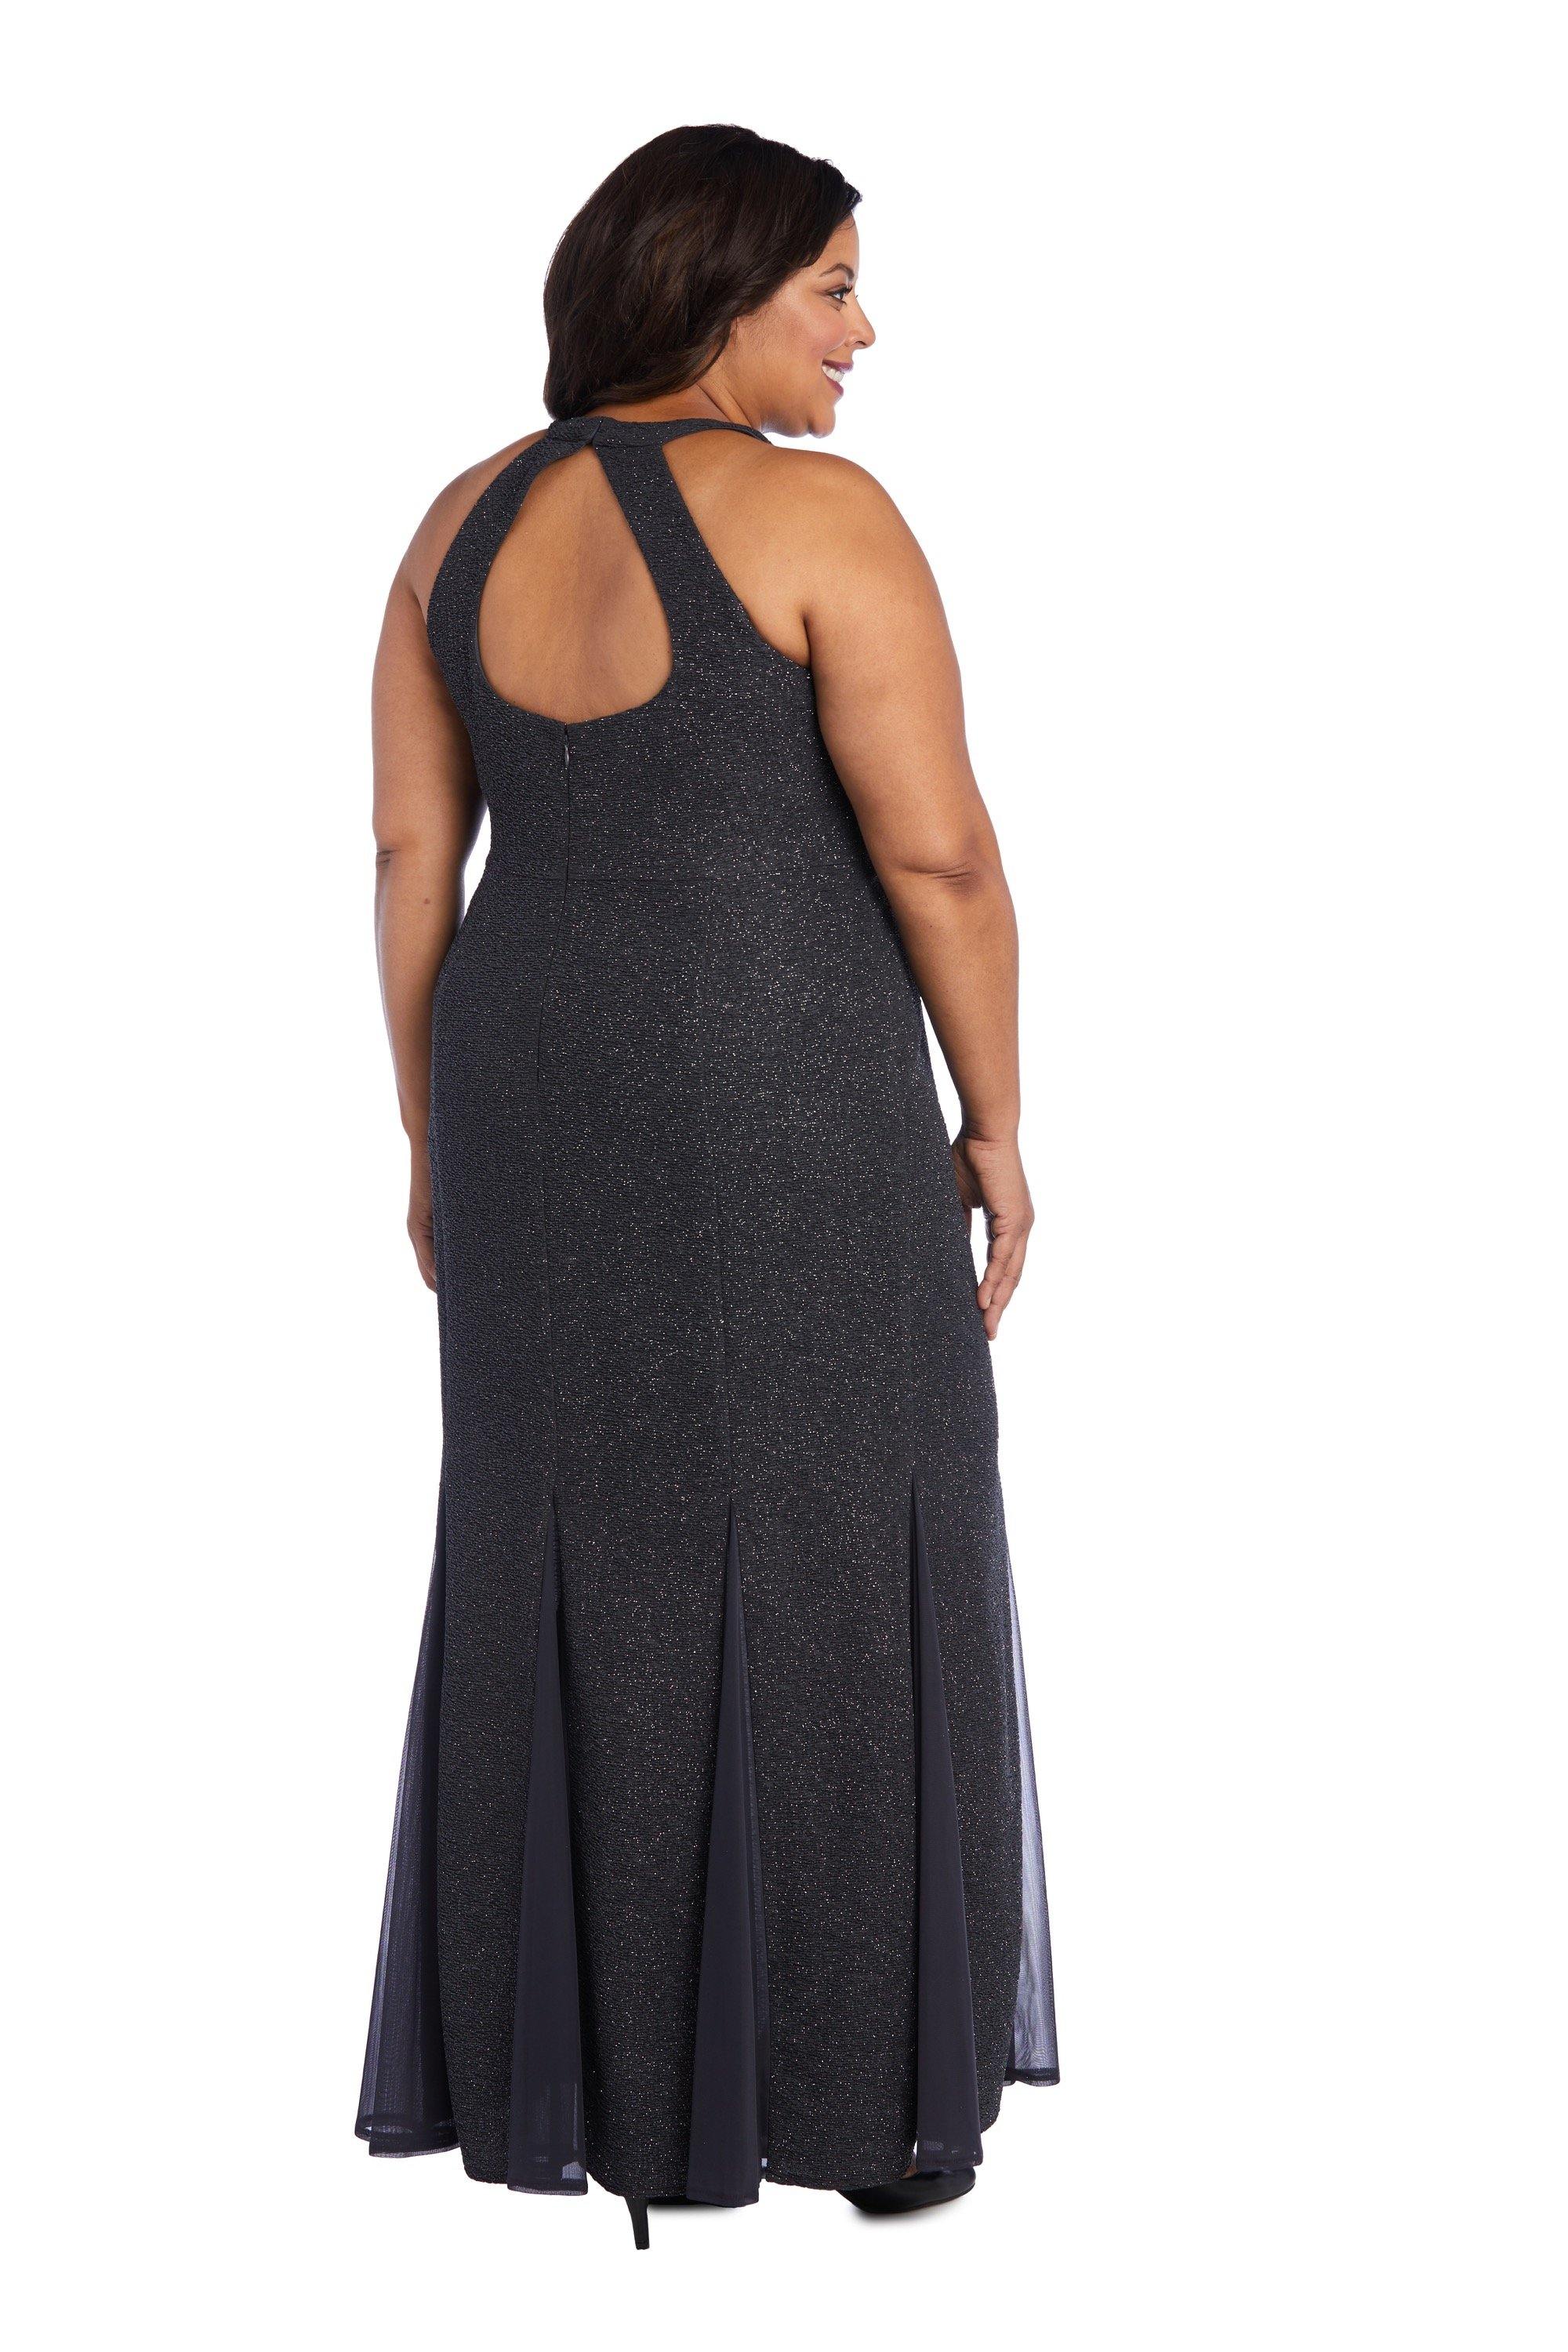 Nightway Long Plus Size Glitter Knit Dress 21555W - The Dress Outlet